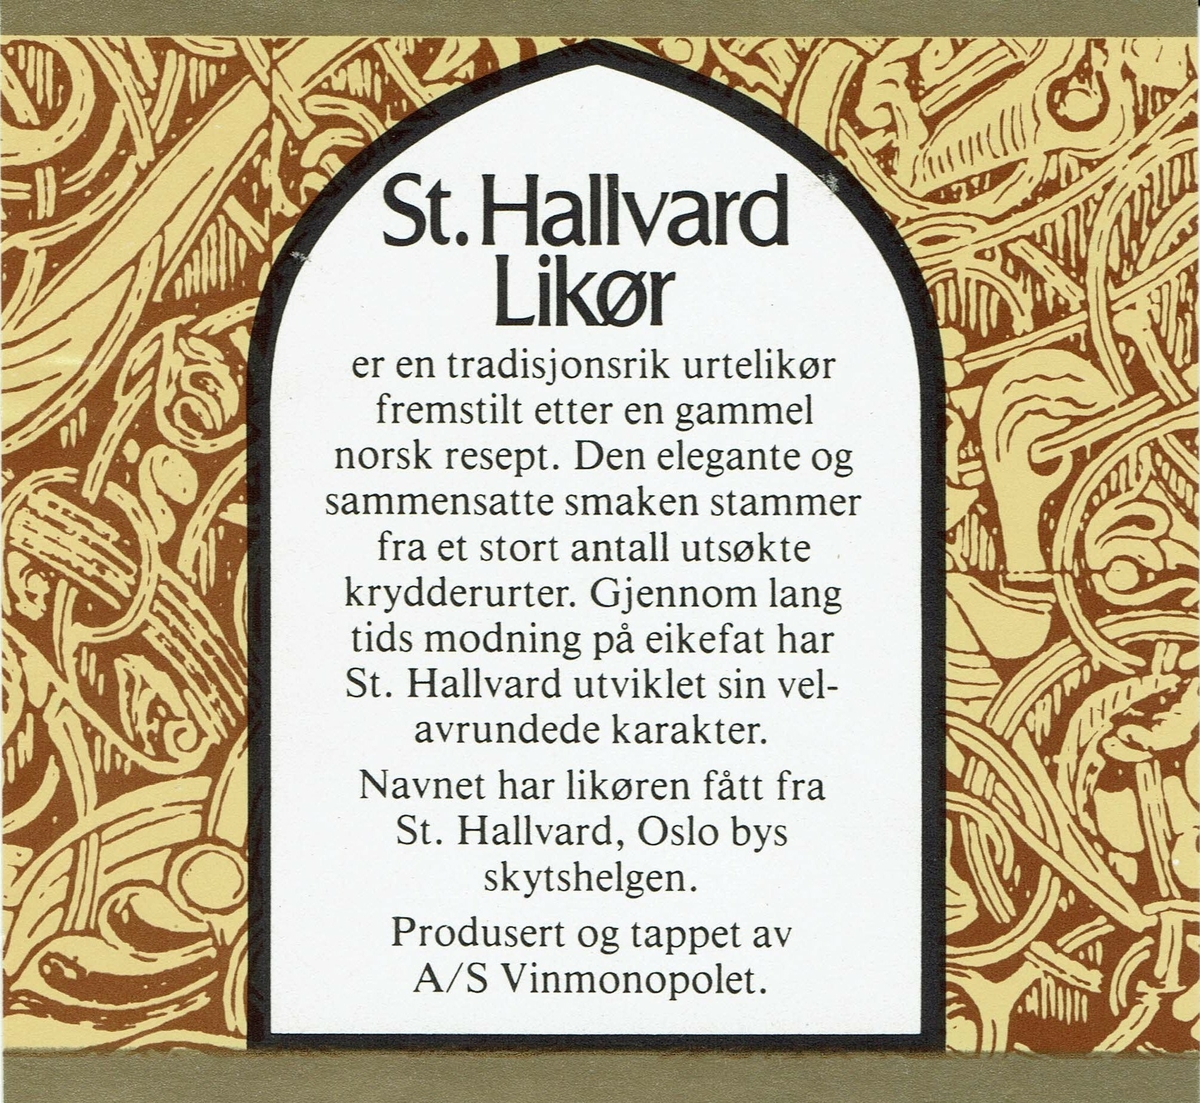 St.Hallvard-likør. 42.5 vol %.  A/S Vinmonopolet. Baksideetikett  fra 1980. 